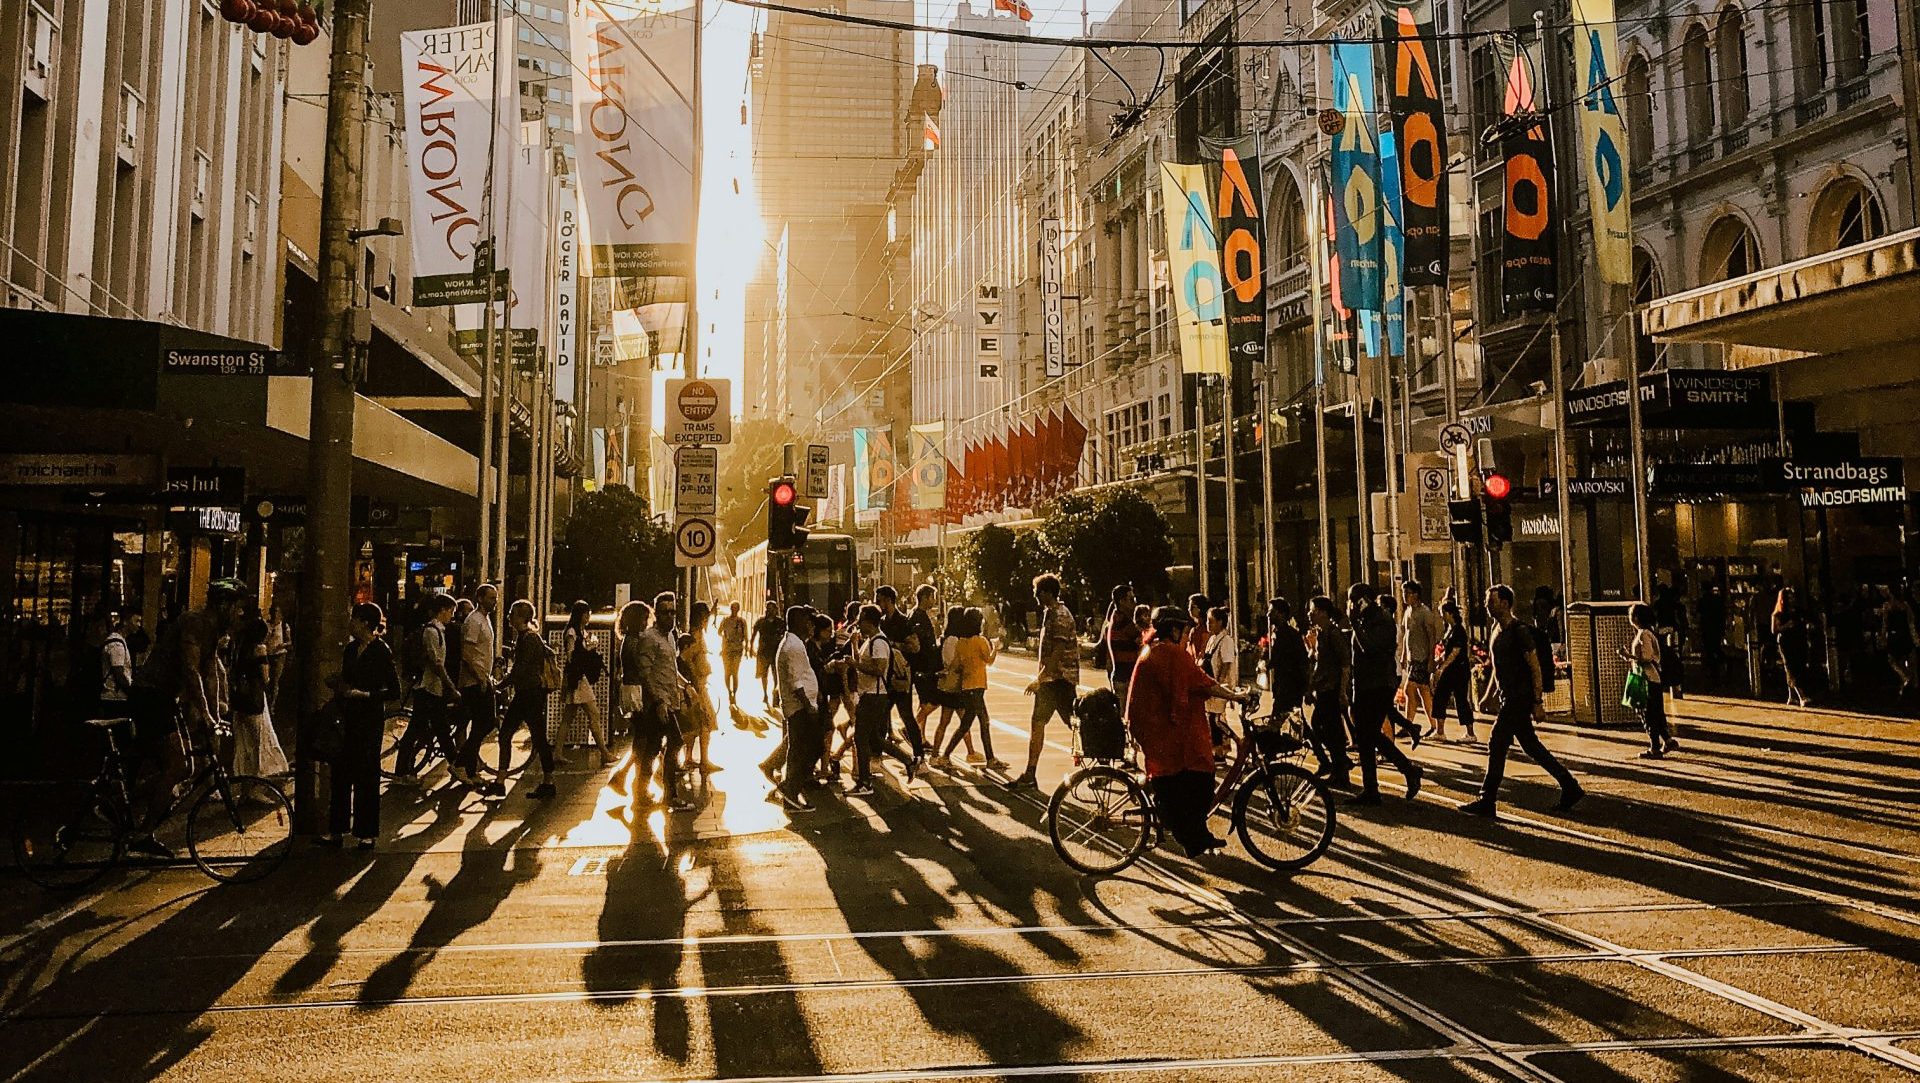 People walking on city street during sunset